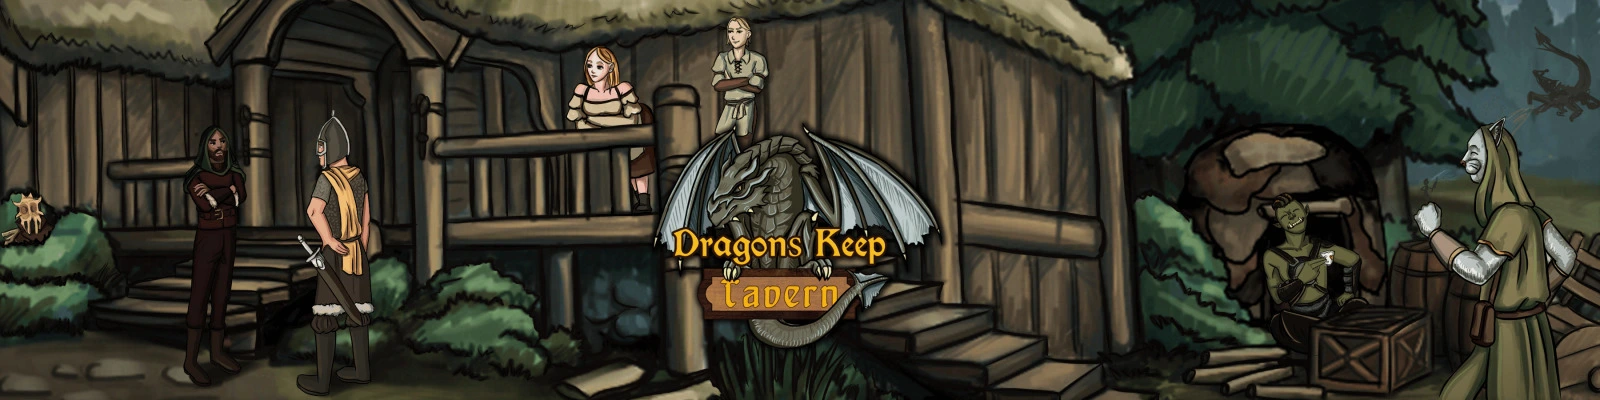 Dragons Keep Tavern main image